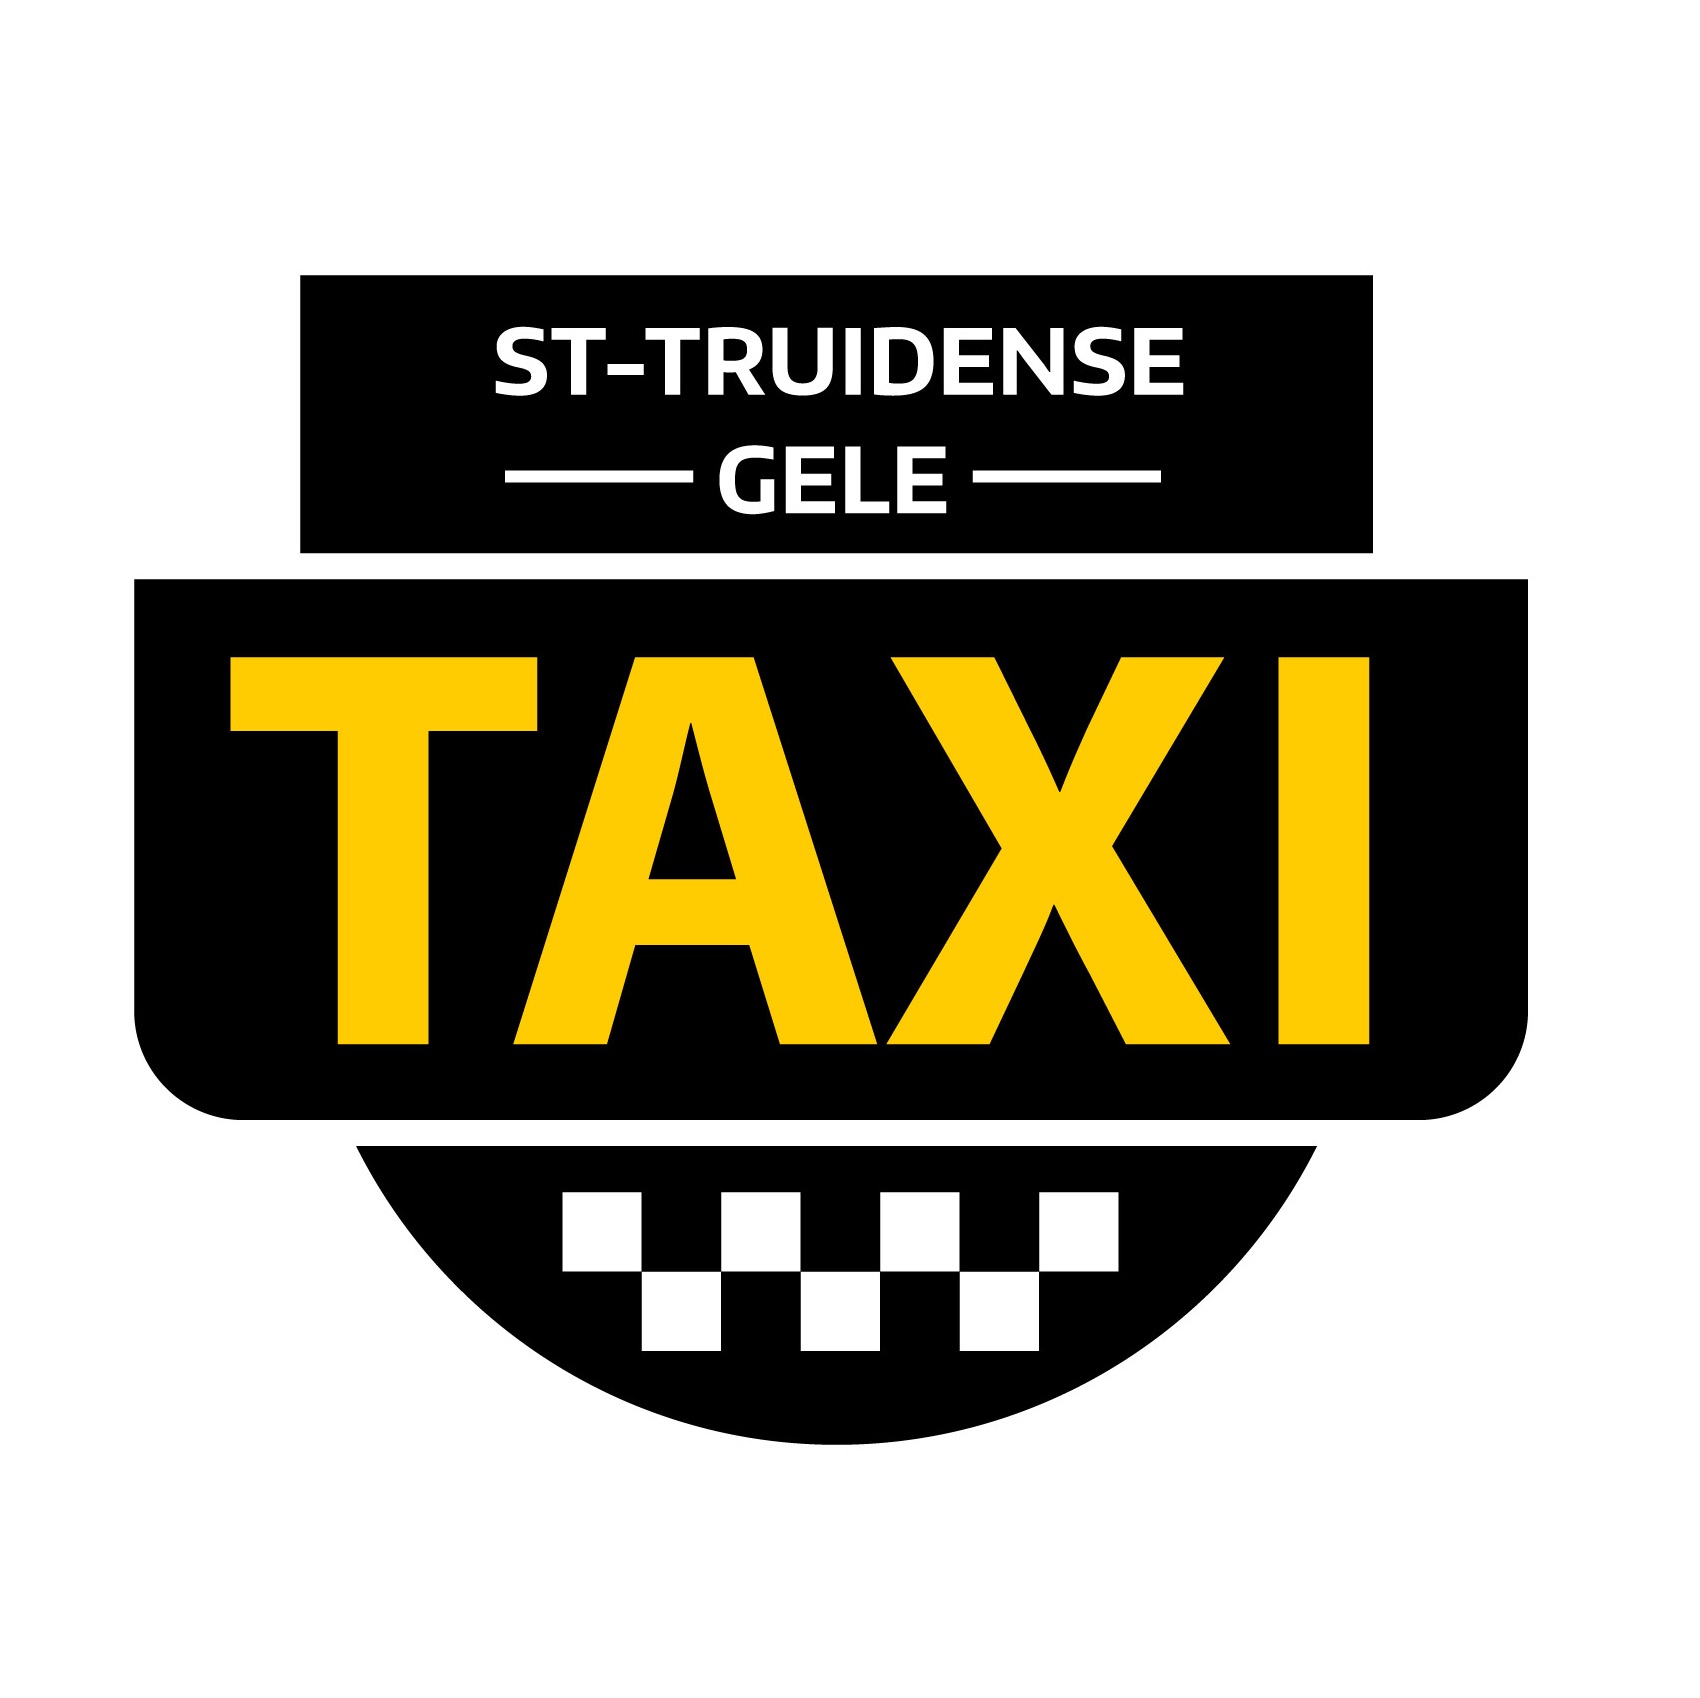 taxibedrijven met luchthavenvervoer Sint-Truiden | St-Truidense Gele Taxi